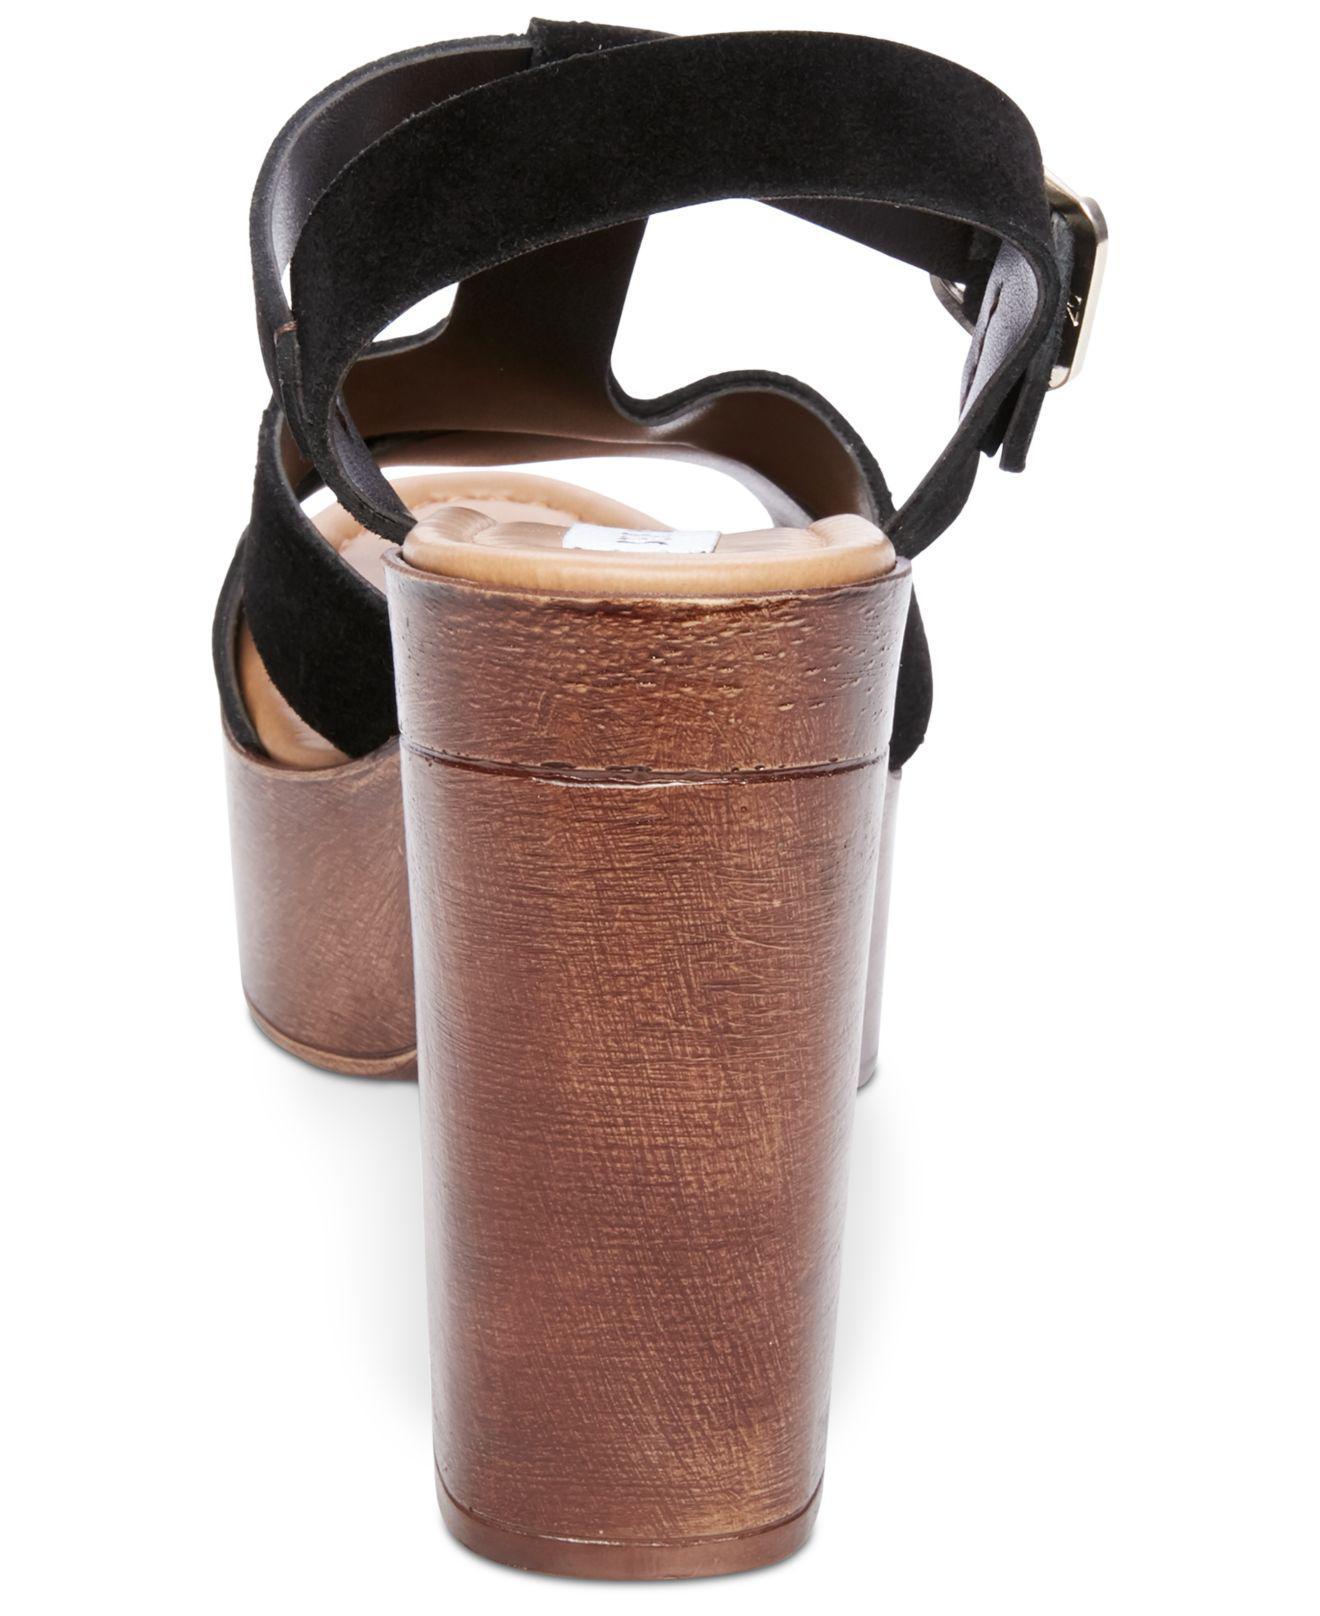 steve madden lucile wooden heel